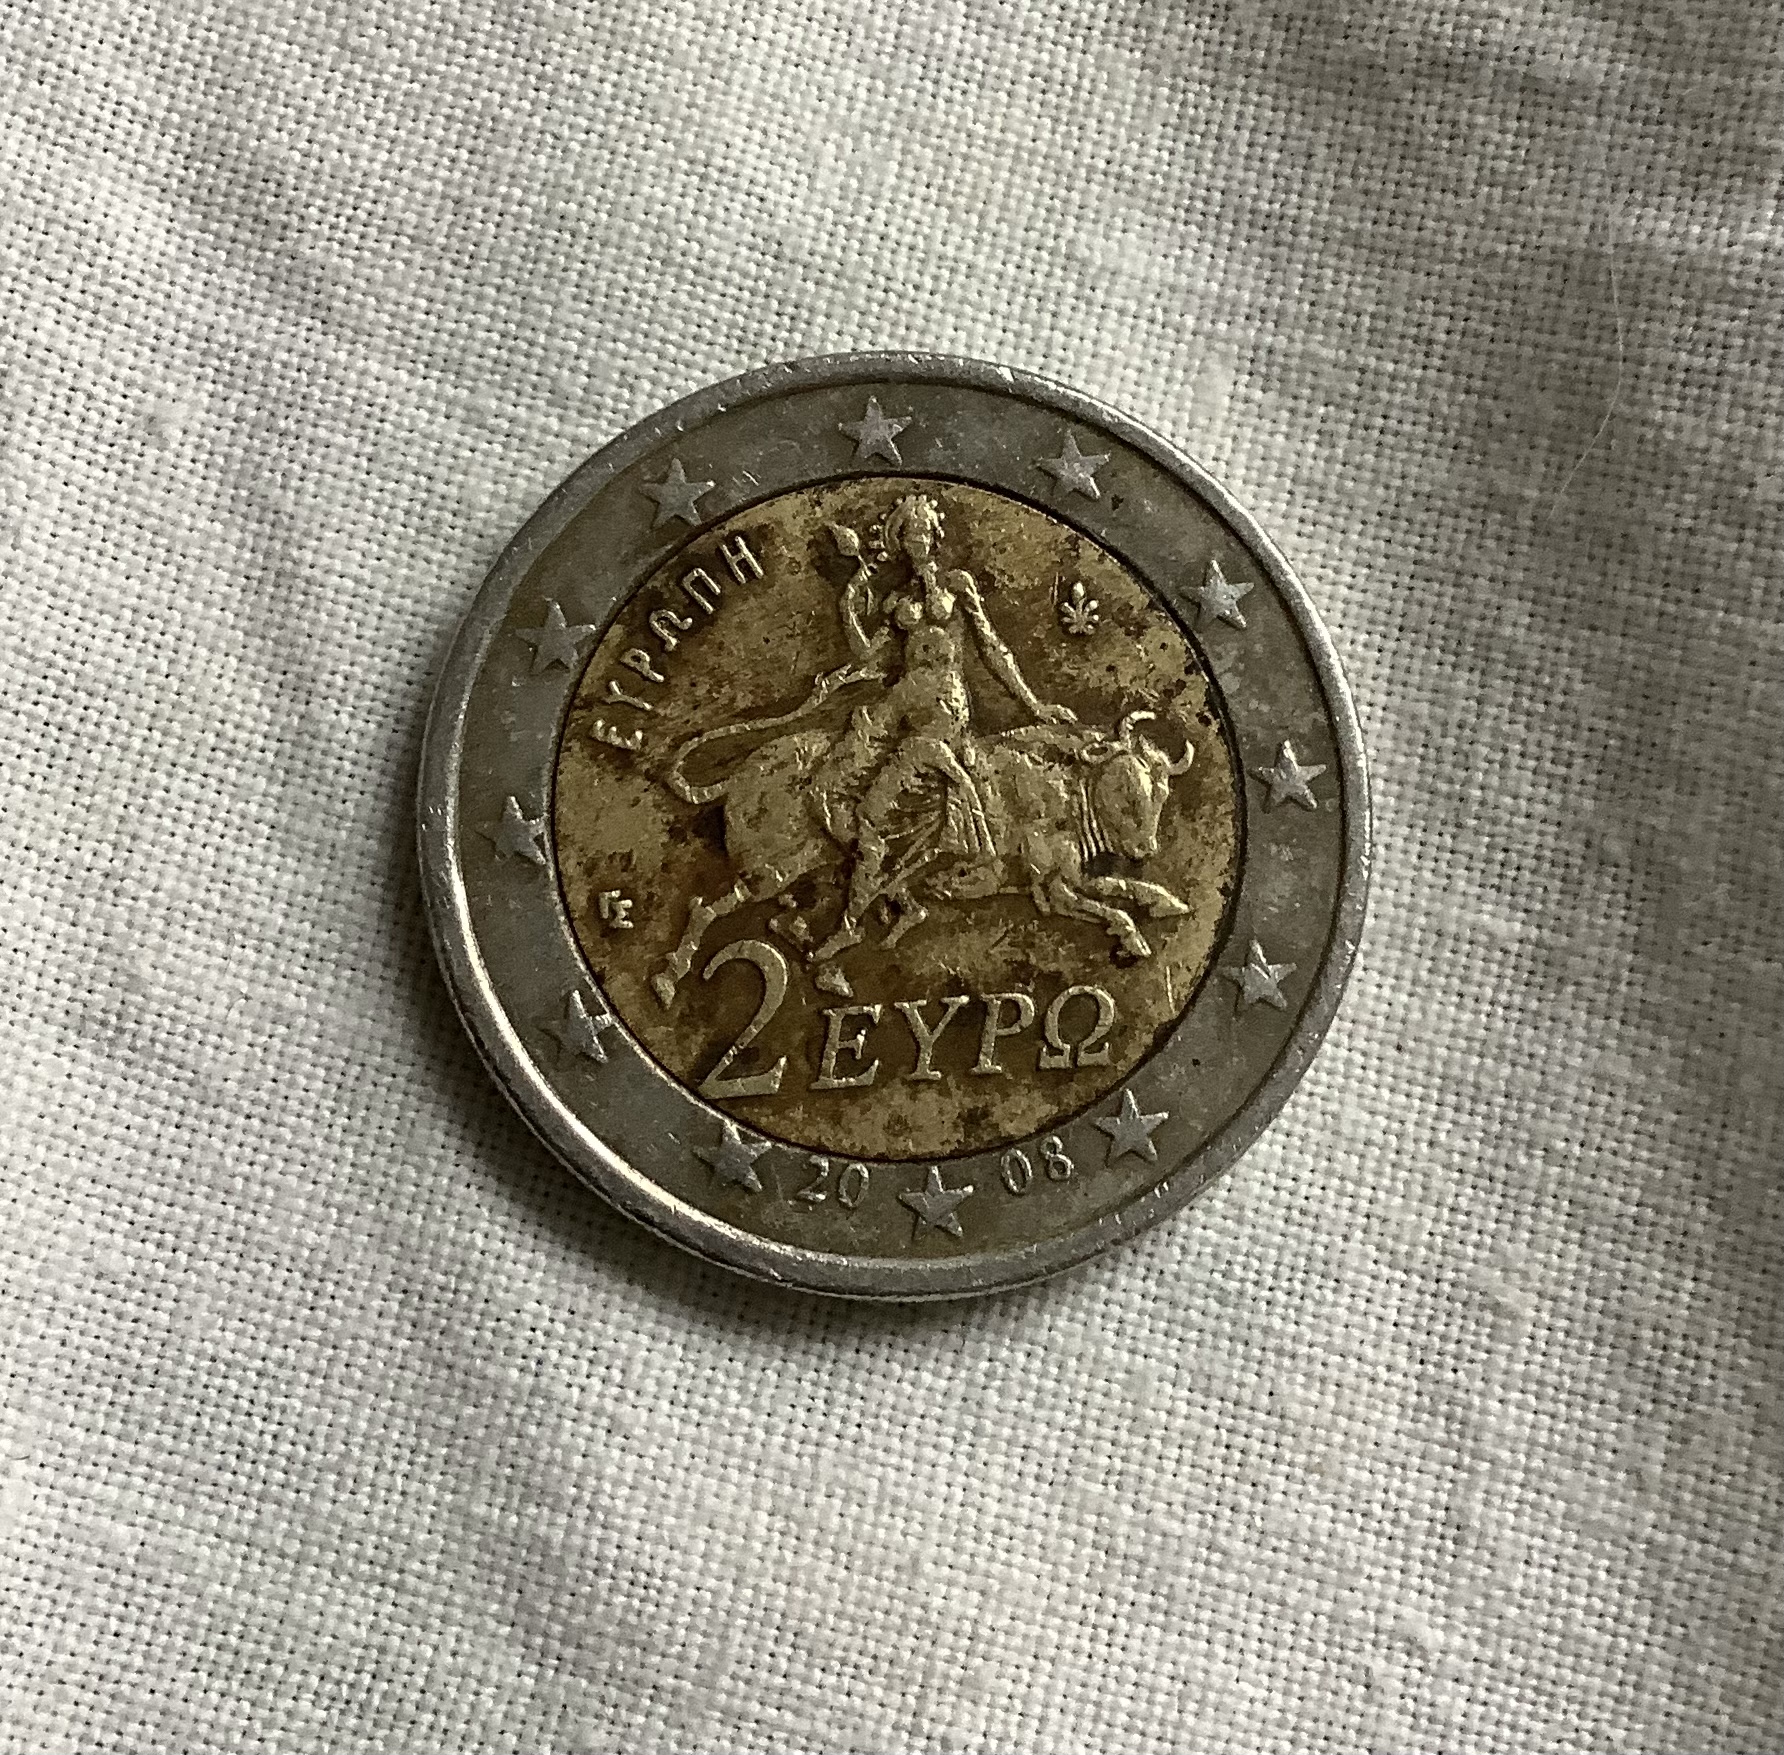 Misprint coin / Fehlpreagung Europa 2 Euro 2008